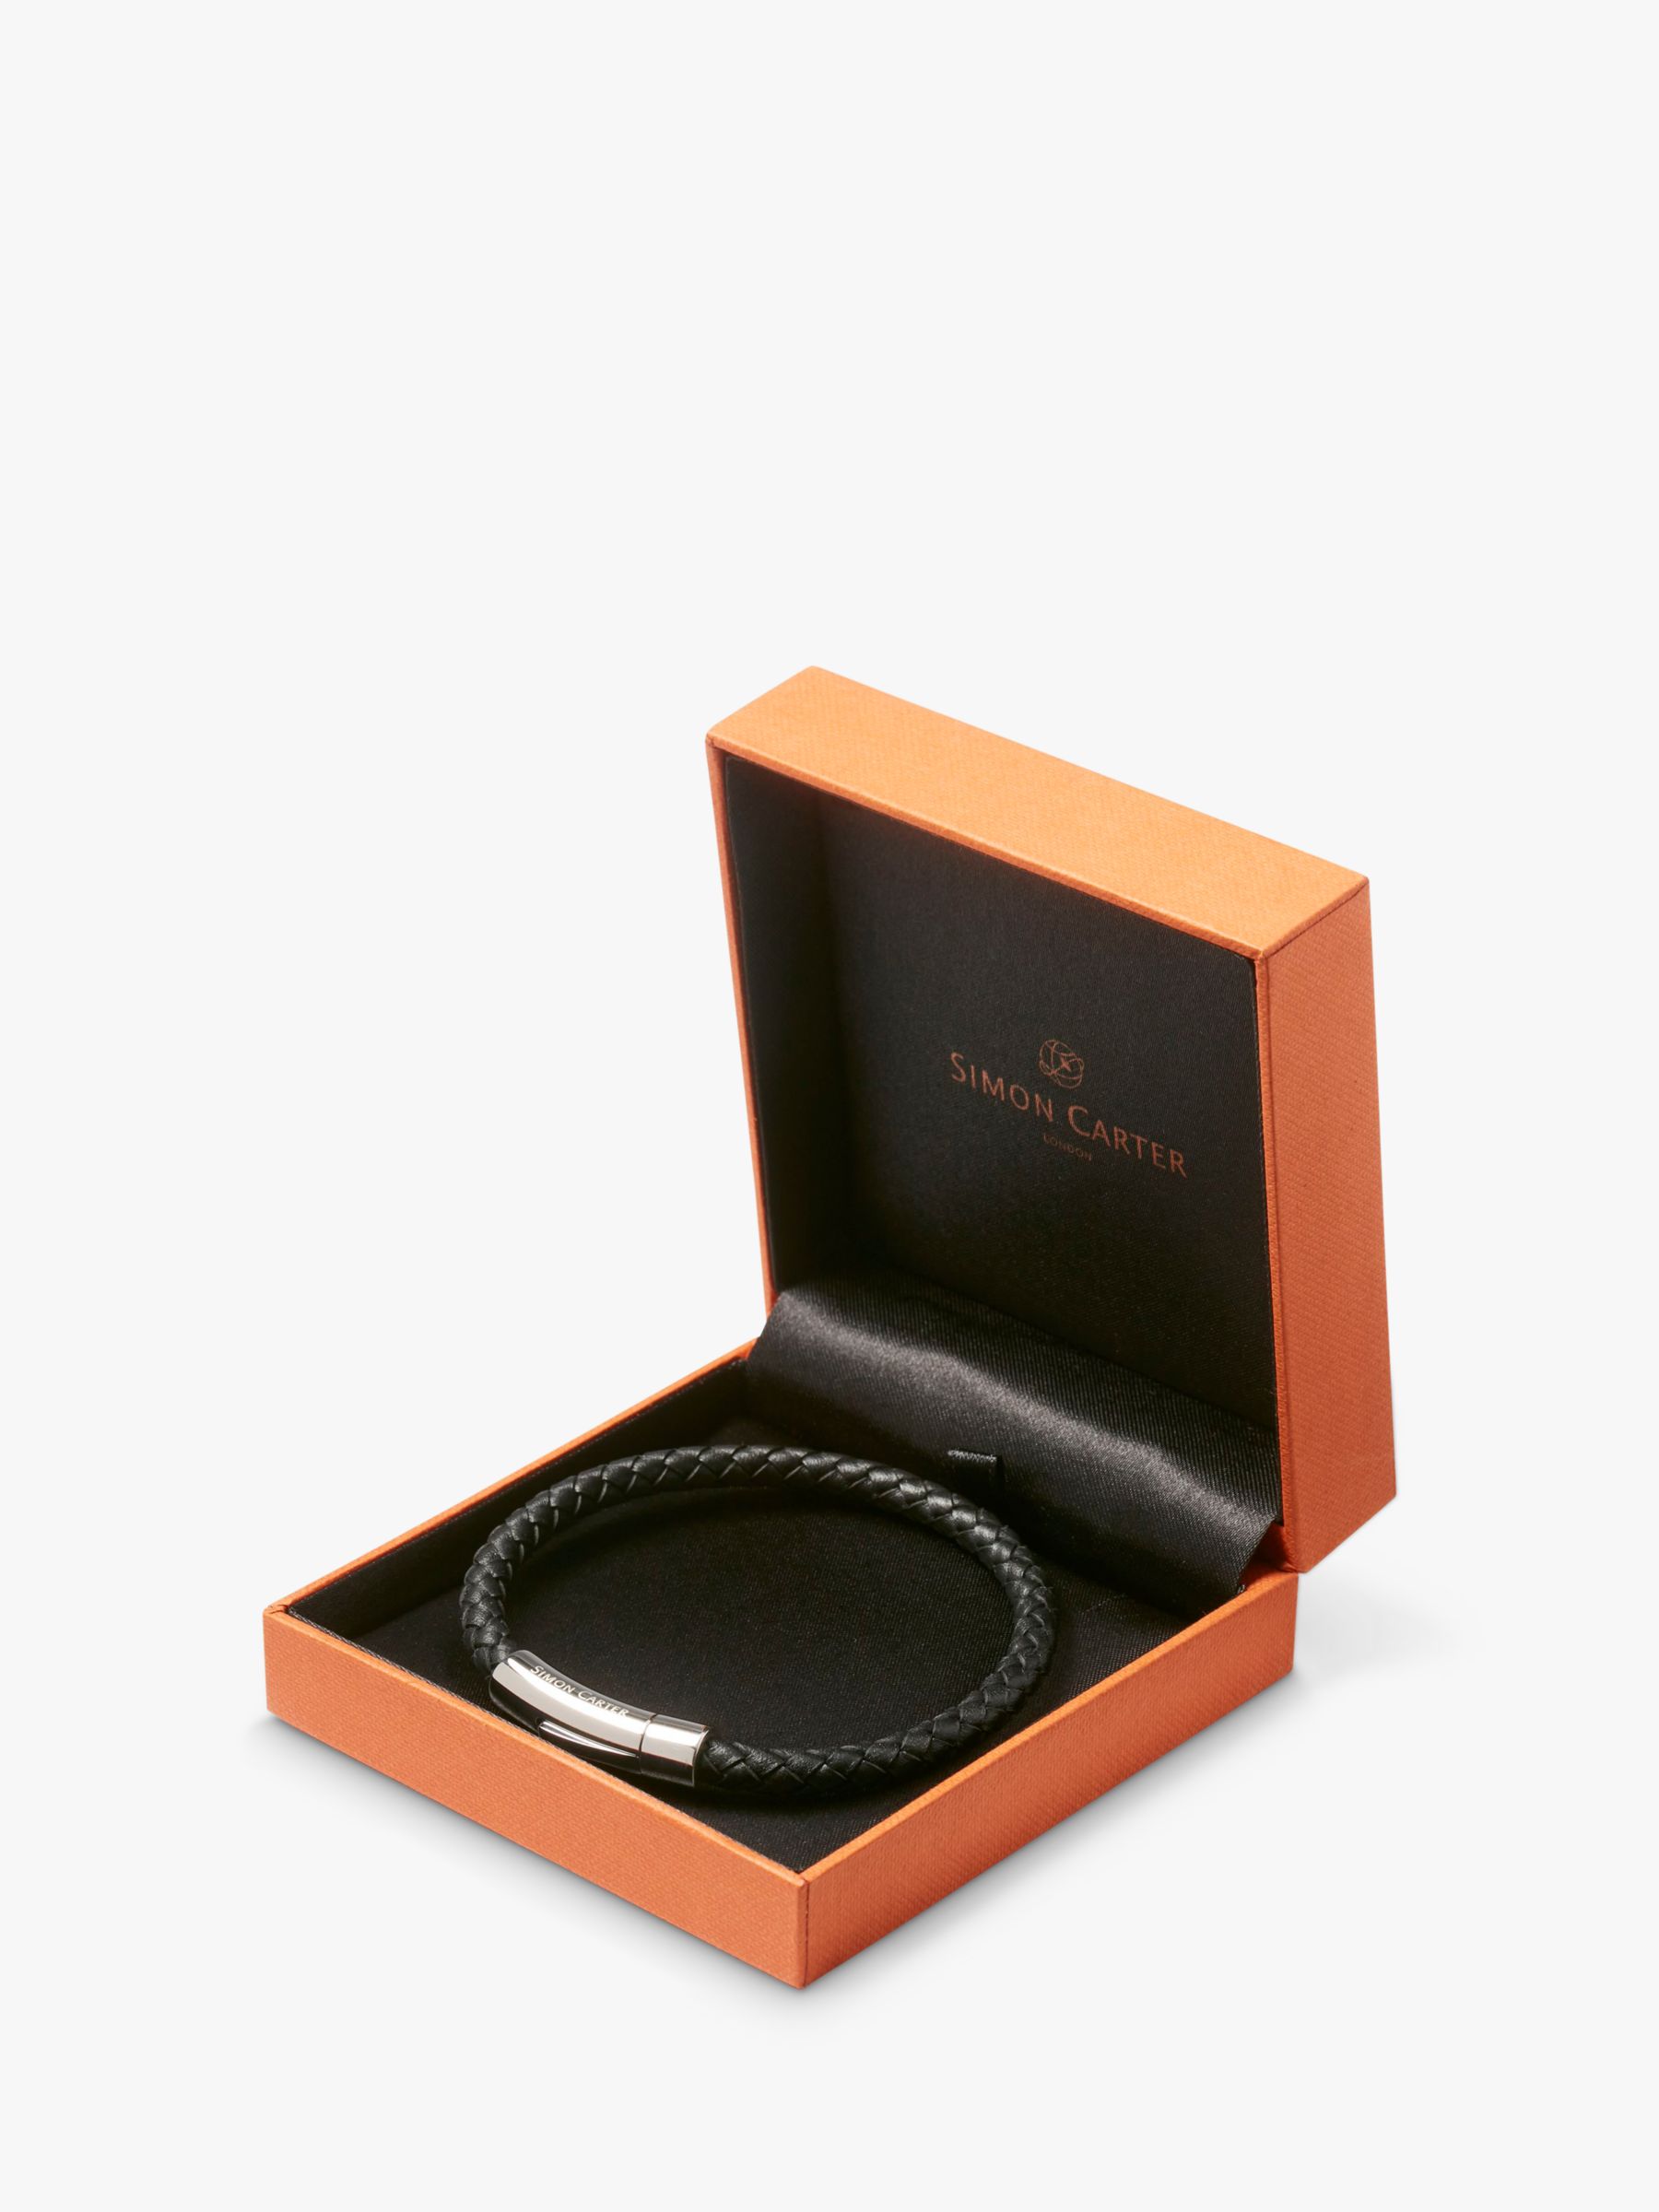 Simon Carter Newquay Men's Braided Leather Bracelet, Black, One size